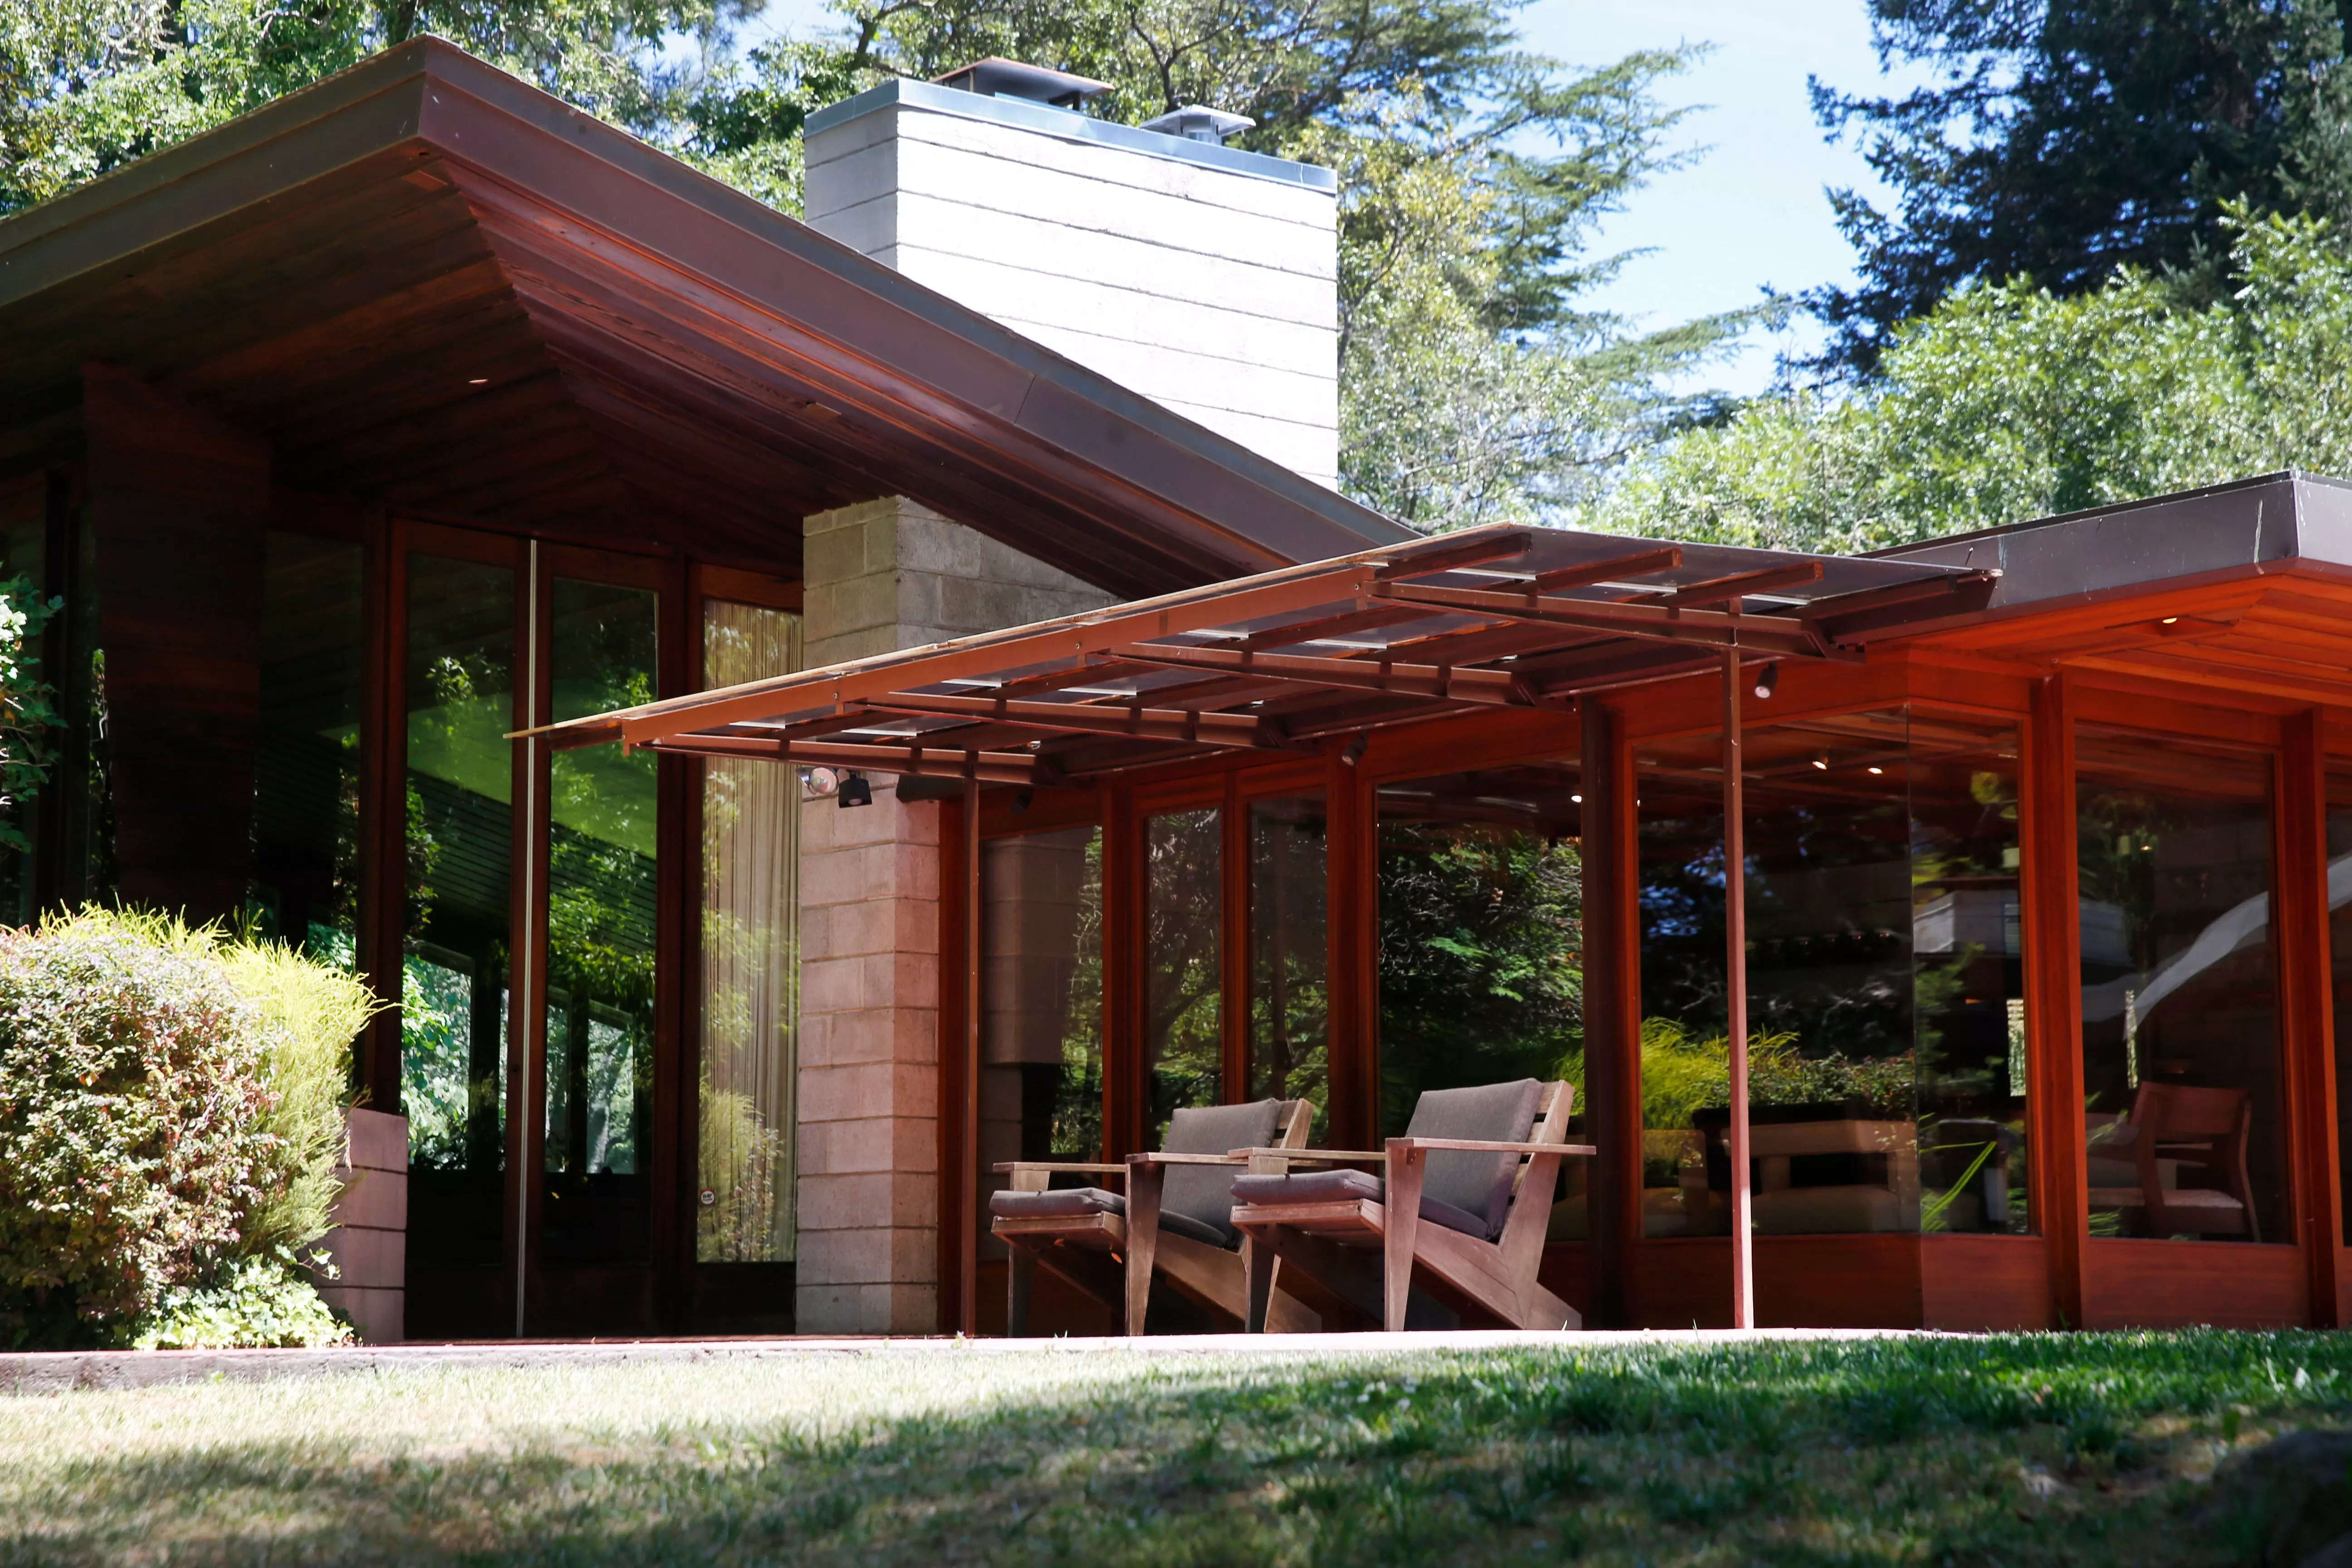 The Maynard Buehler House, designed by Frank Lloyd Wright, in California via 2019. 